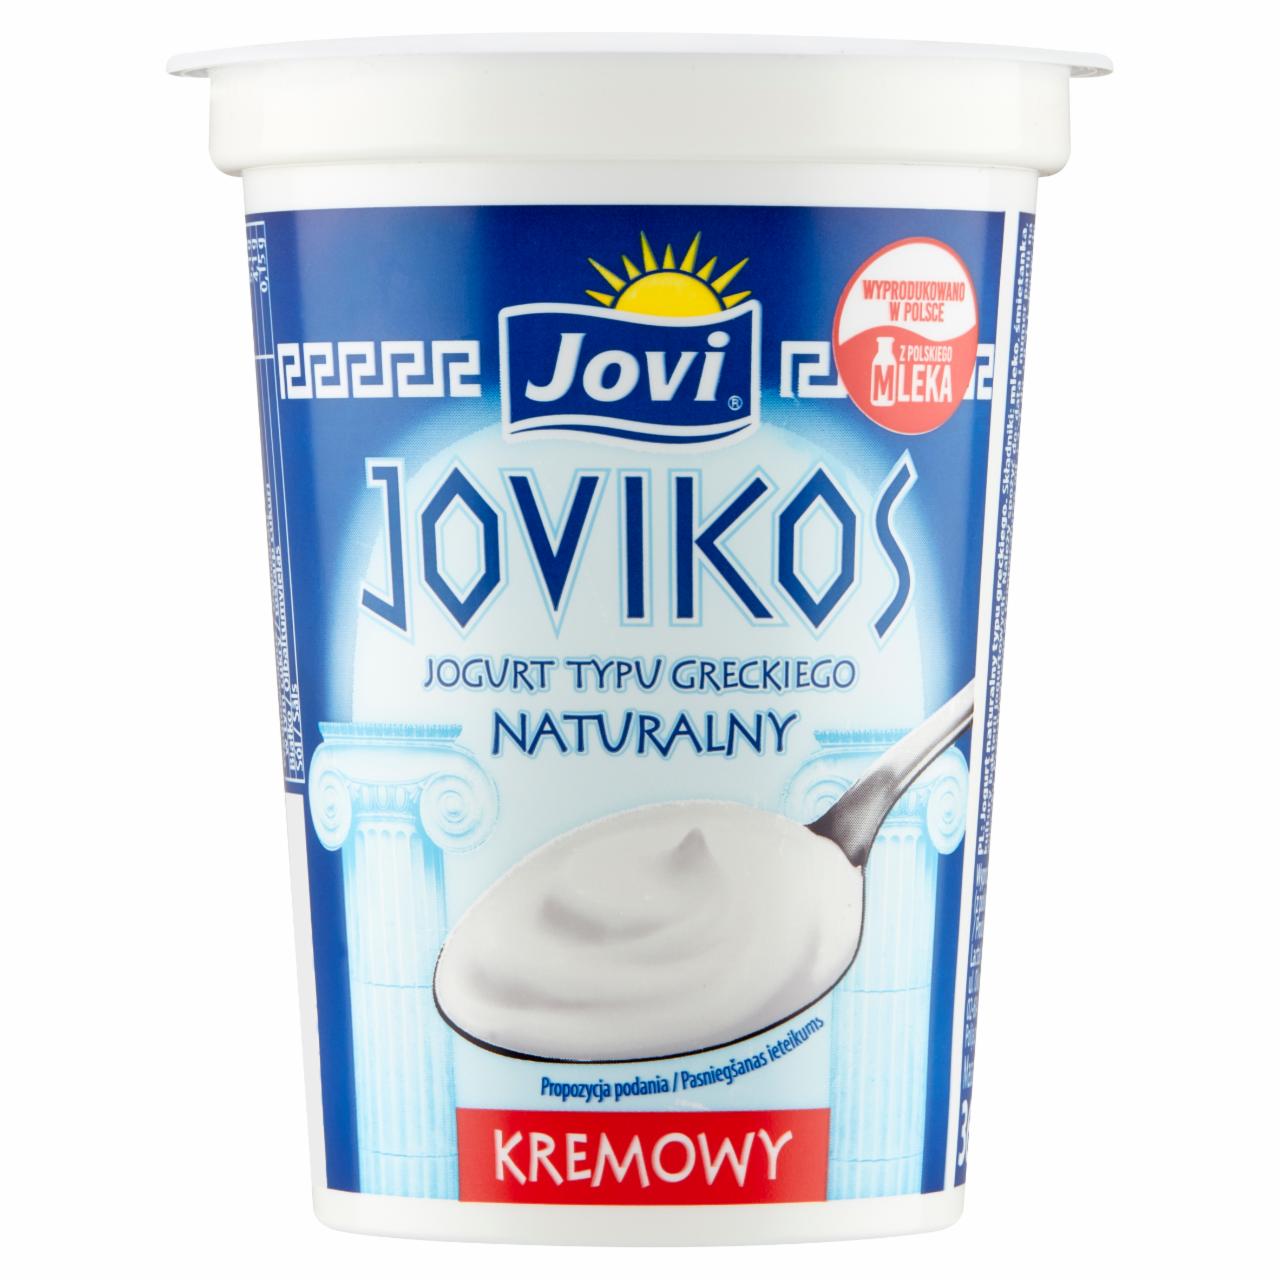 Zdjęcia - Jovi Jovikos Jogurt typu greckiego naturalny kremowy 360 g